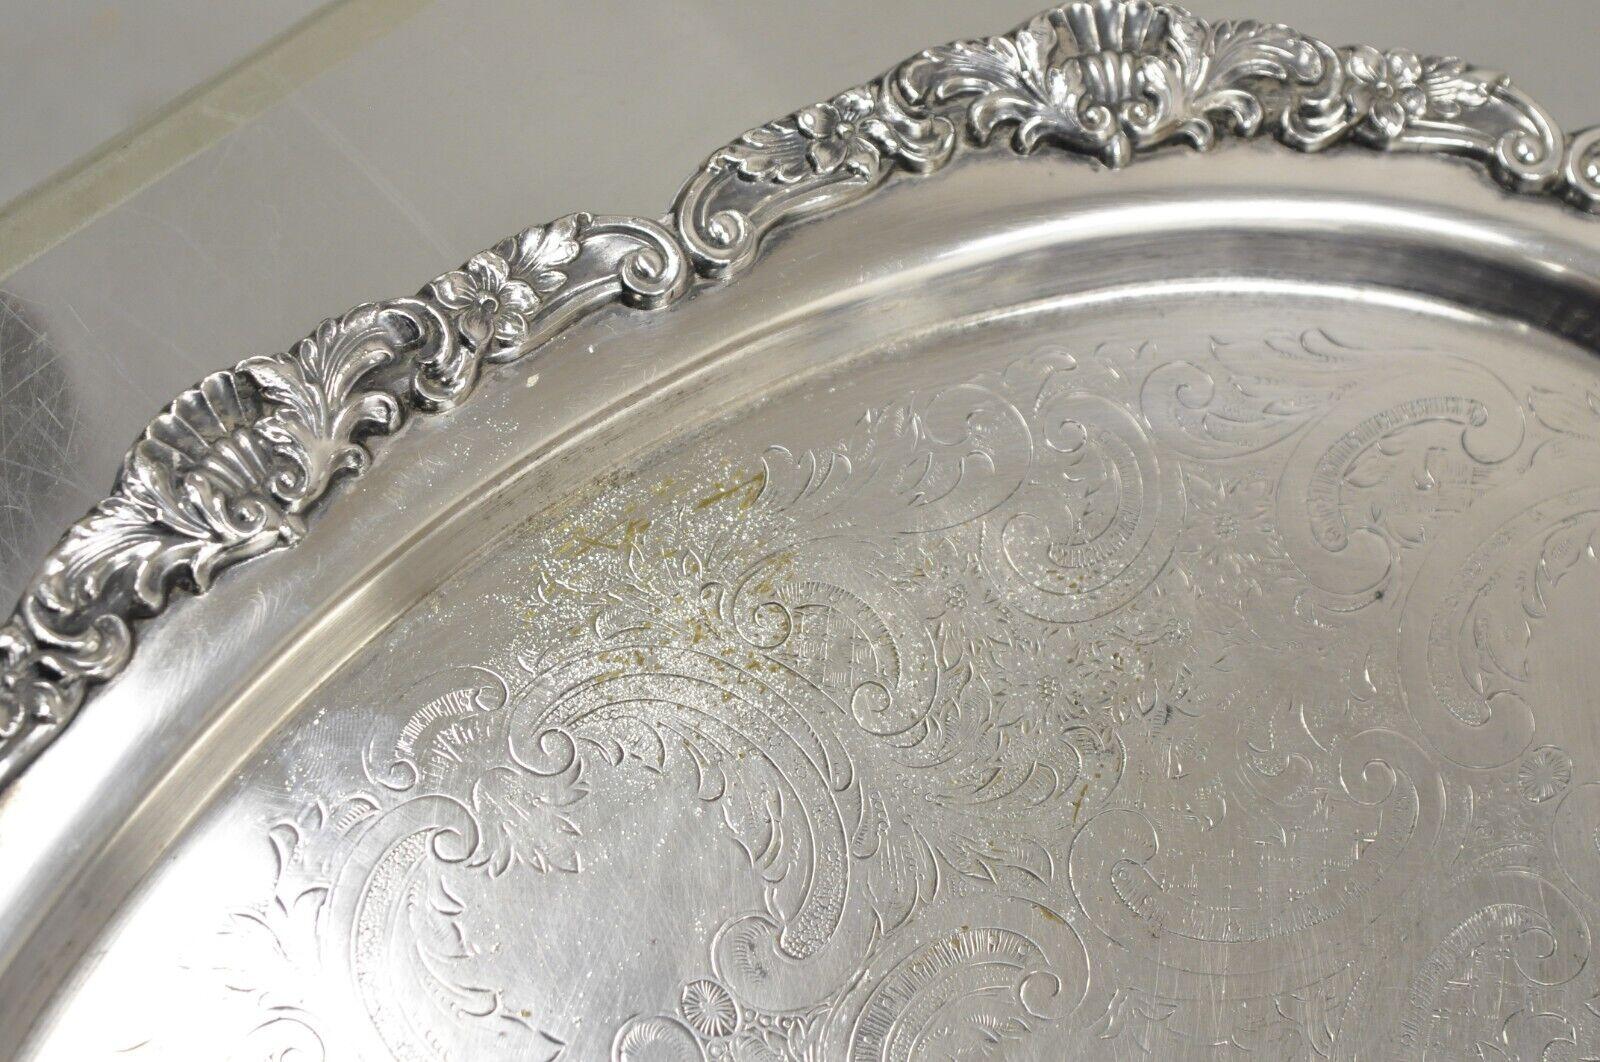 Regency Vintage Epca Bristol Silverplate by Poole Silver Plated Oval Platter Tray